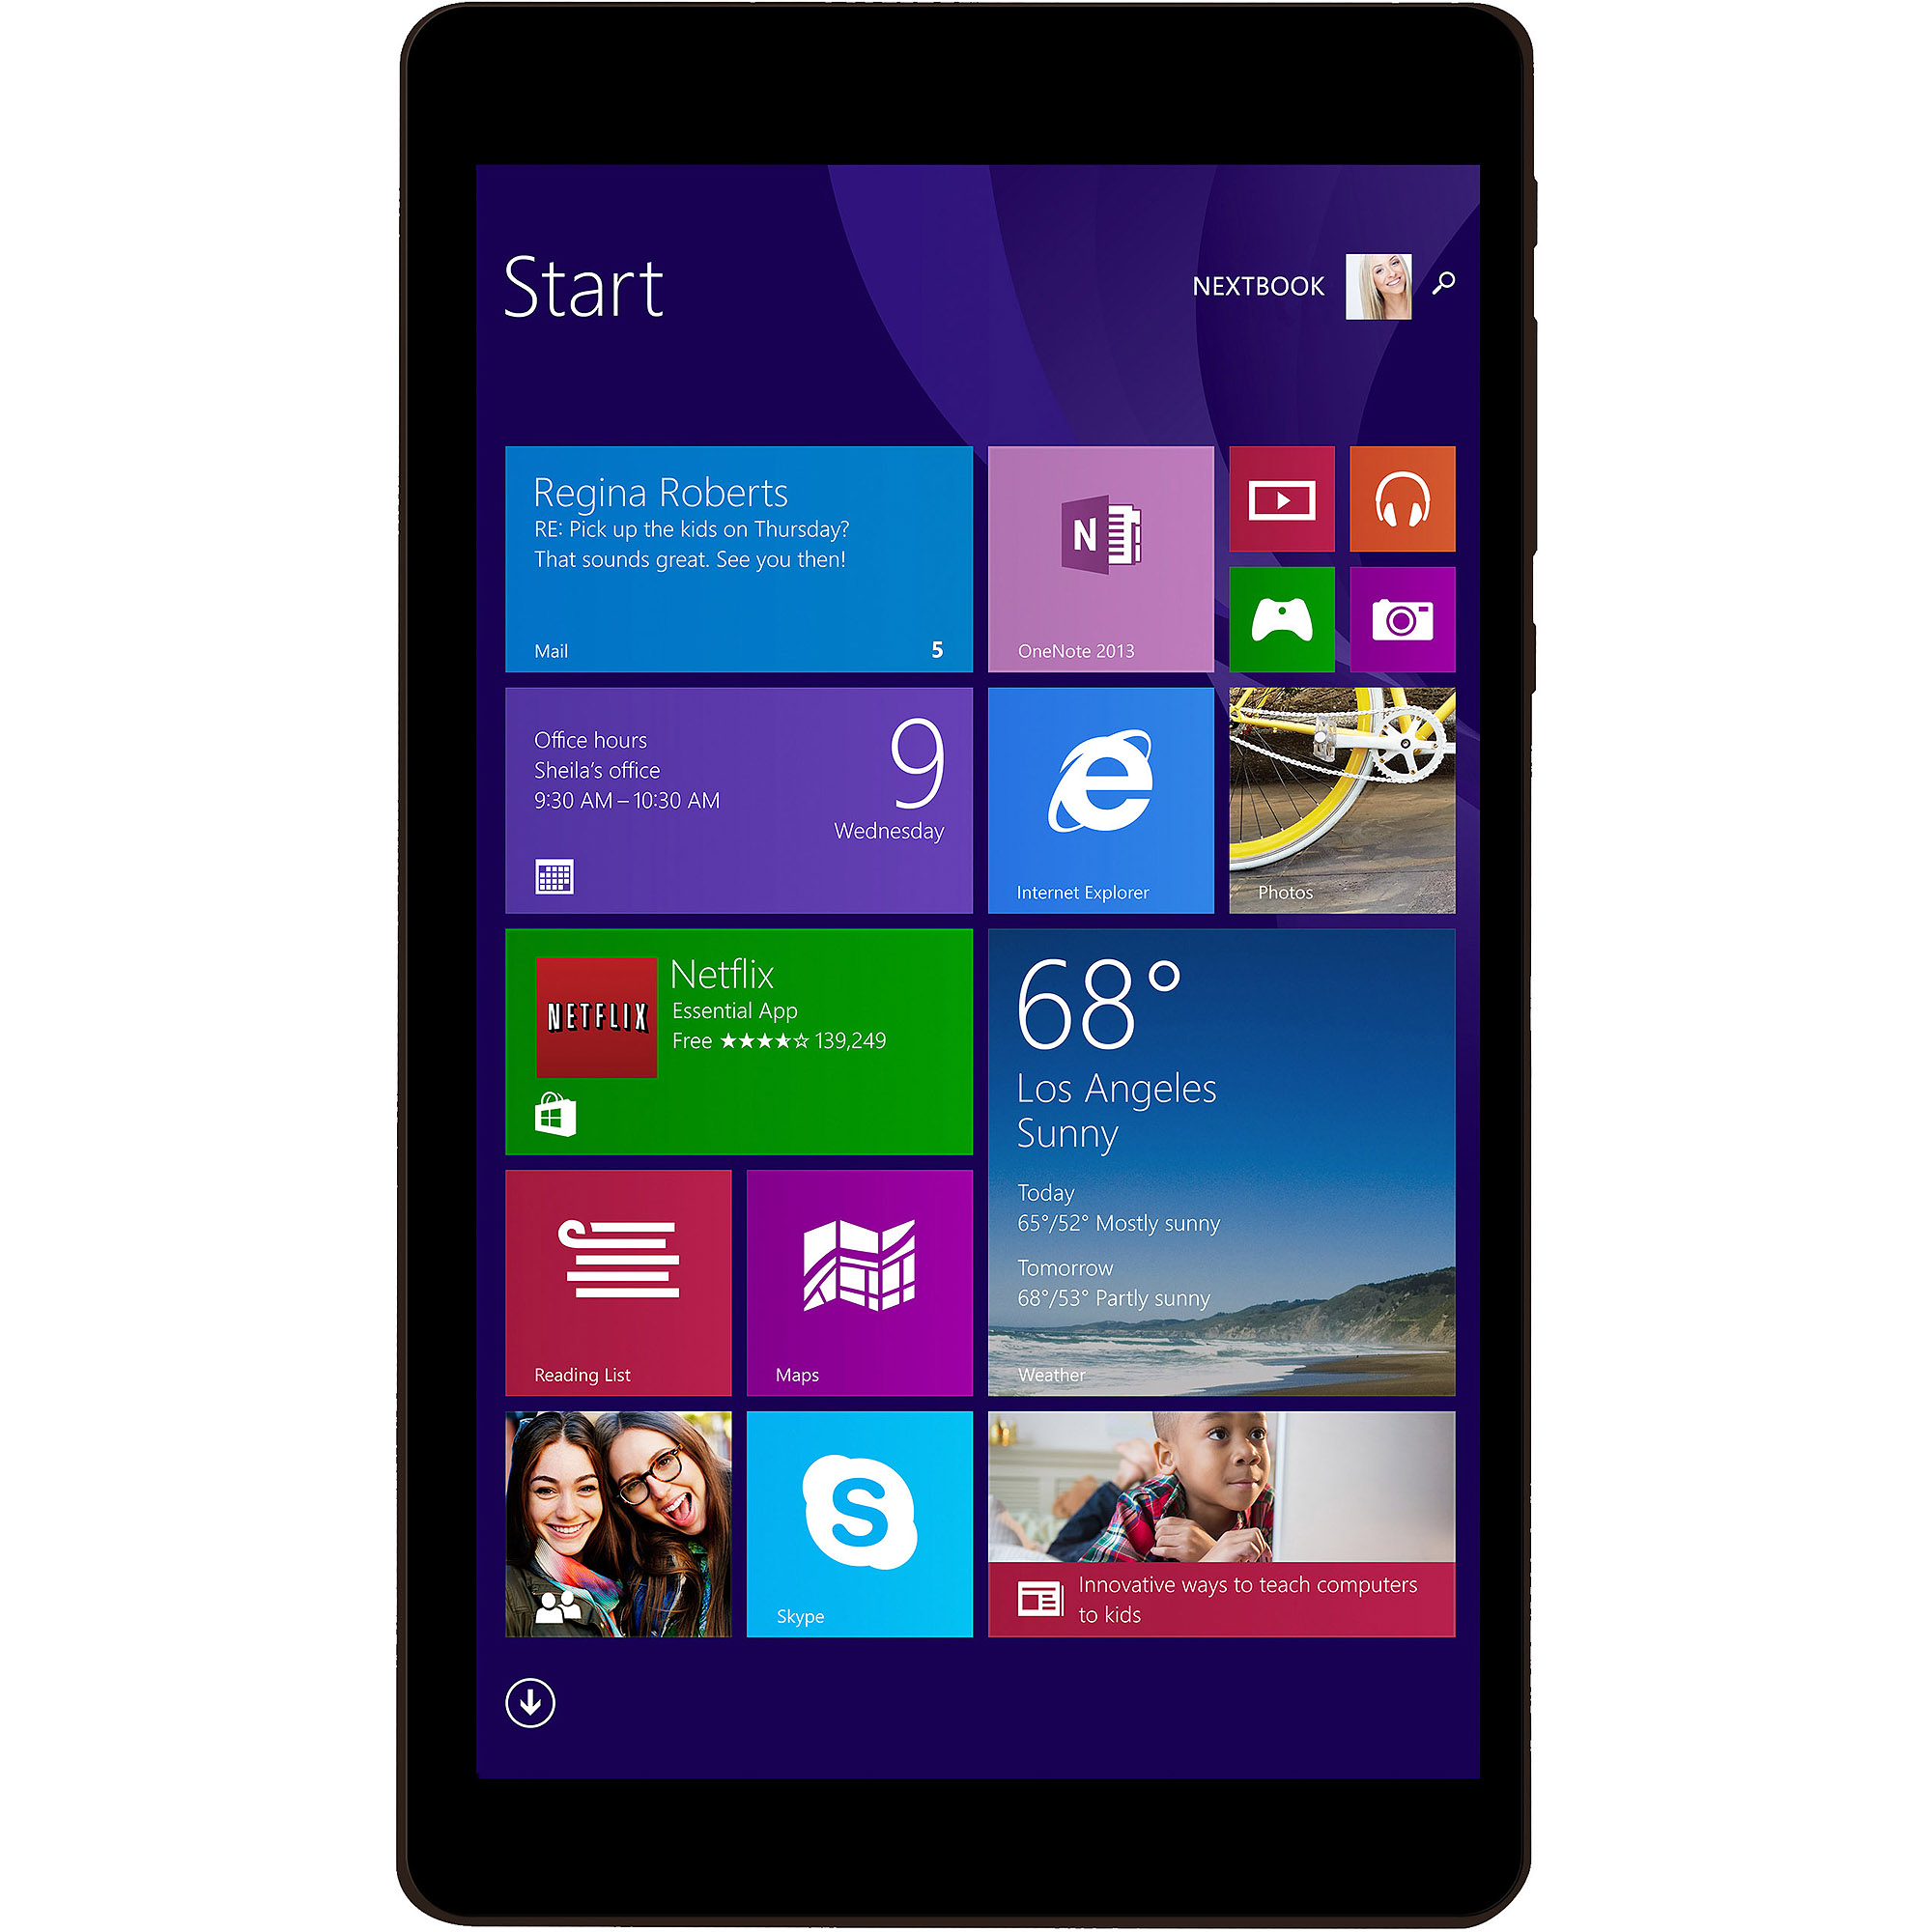 Nextbook 8" Tablet 16GB Windows 8.1 - image 1 of 2